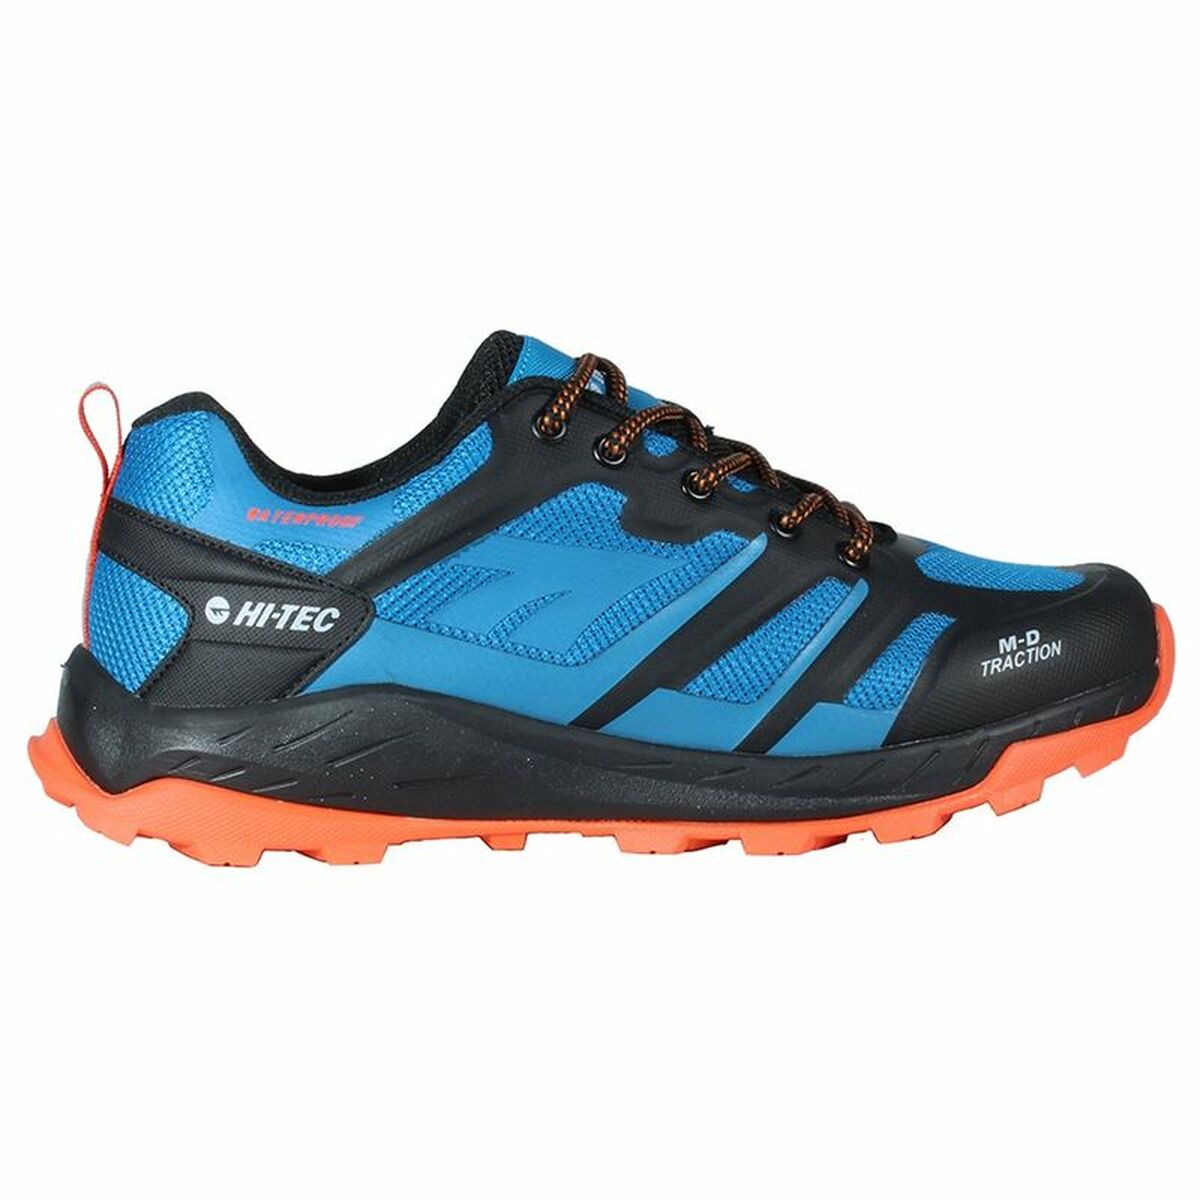 Running Shoes for Adults Hi-Tec Toubkal Low Waterproof Navy Blue Men